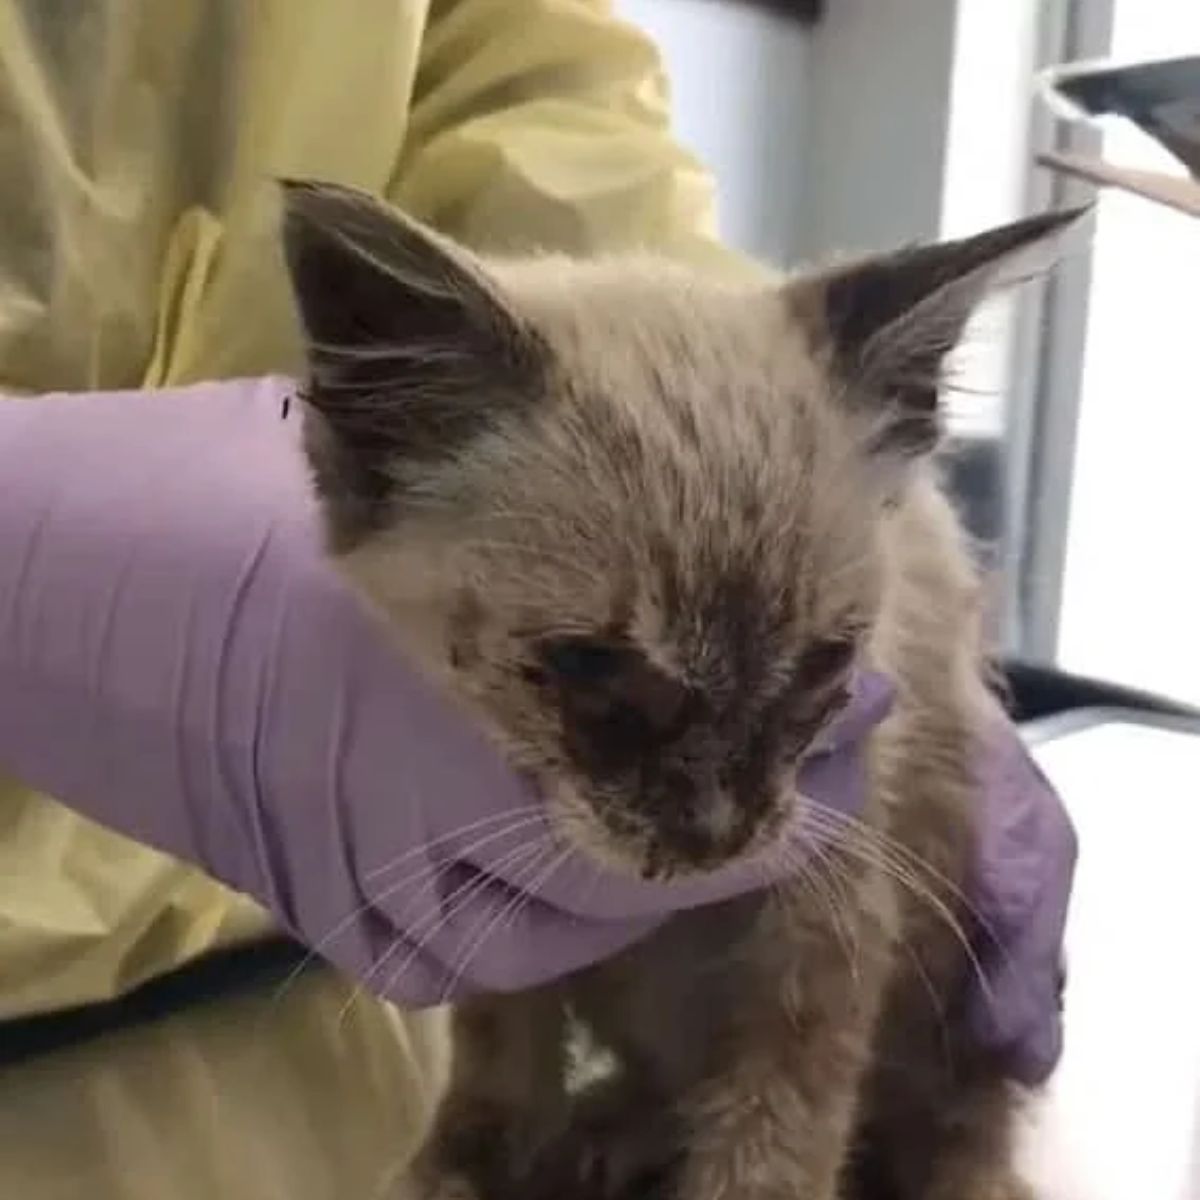 veterinarian holding injured cat